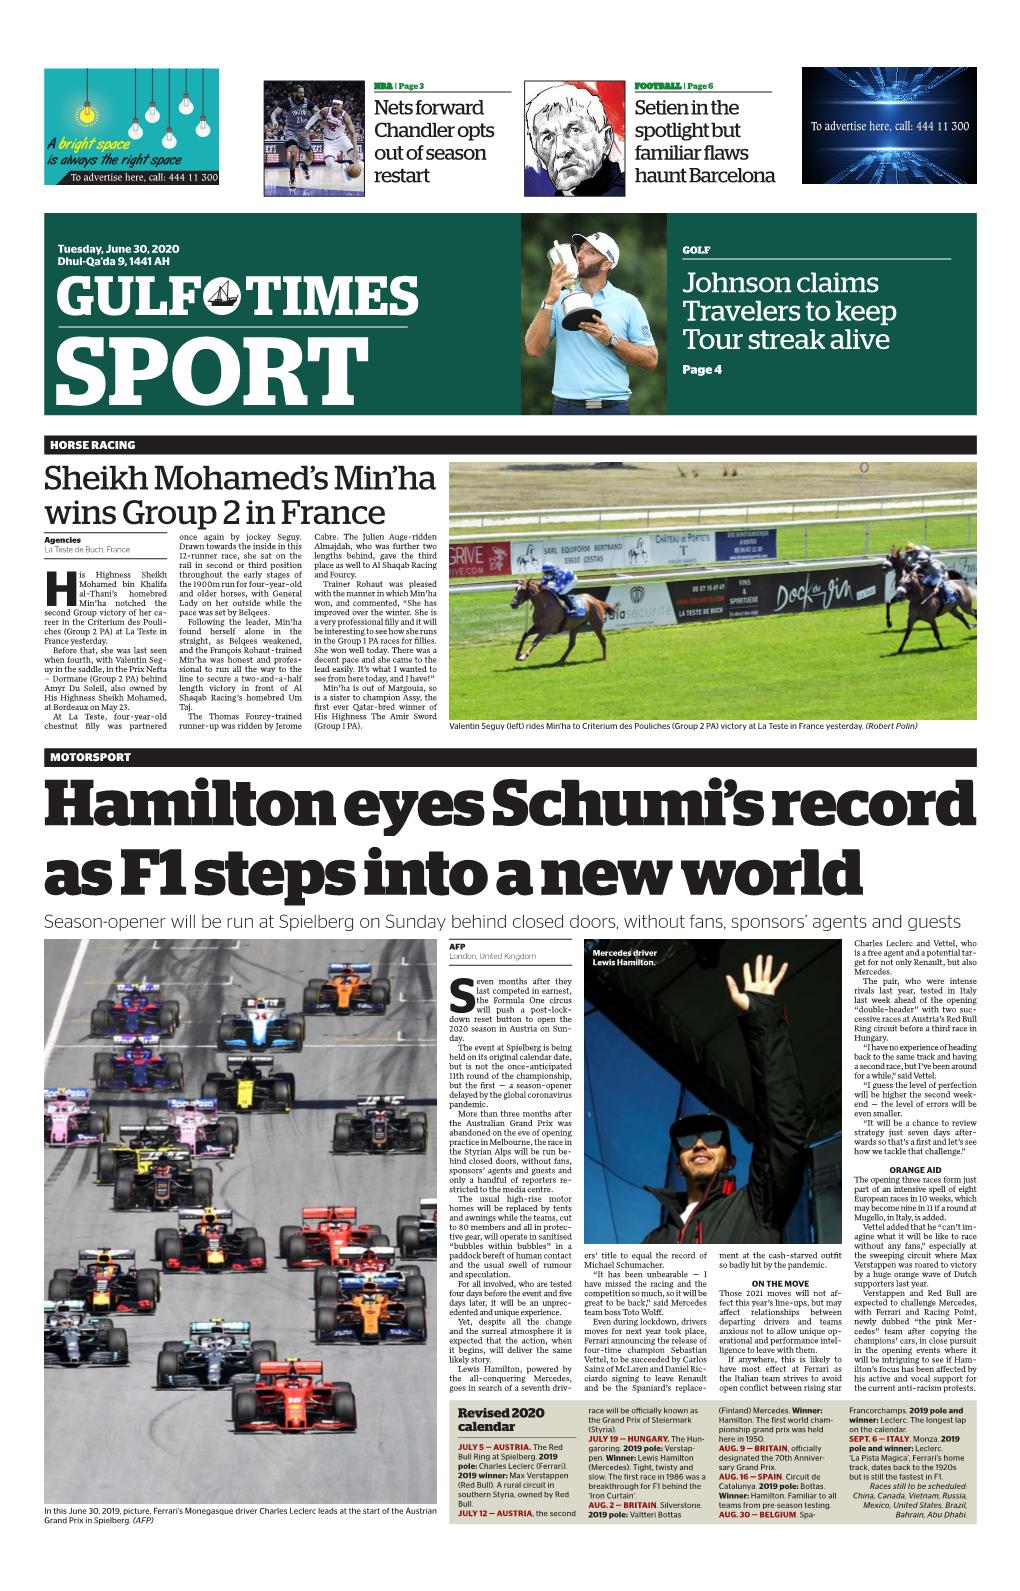 Hamilton Eyes Schumi's Record As F1 Steps Into a New World